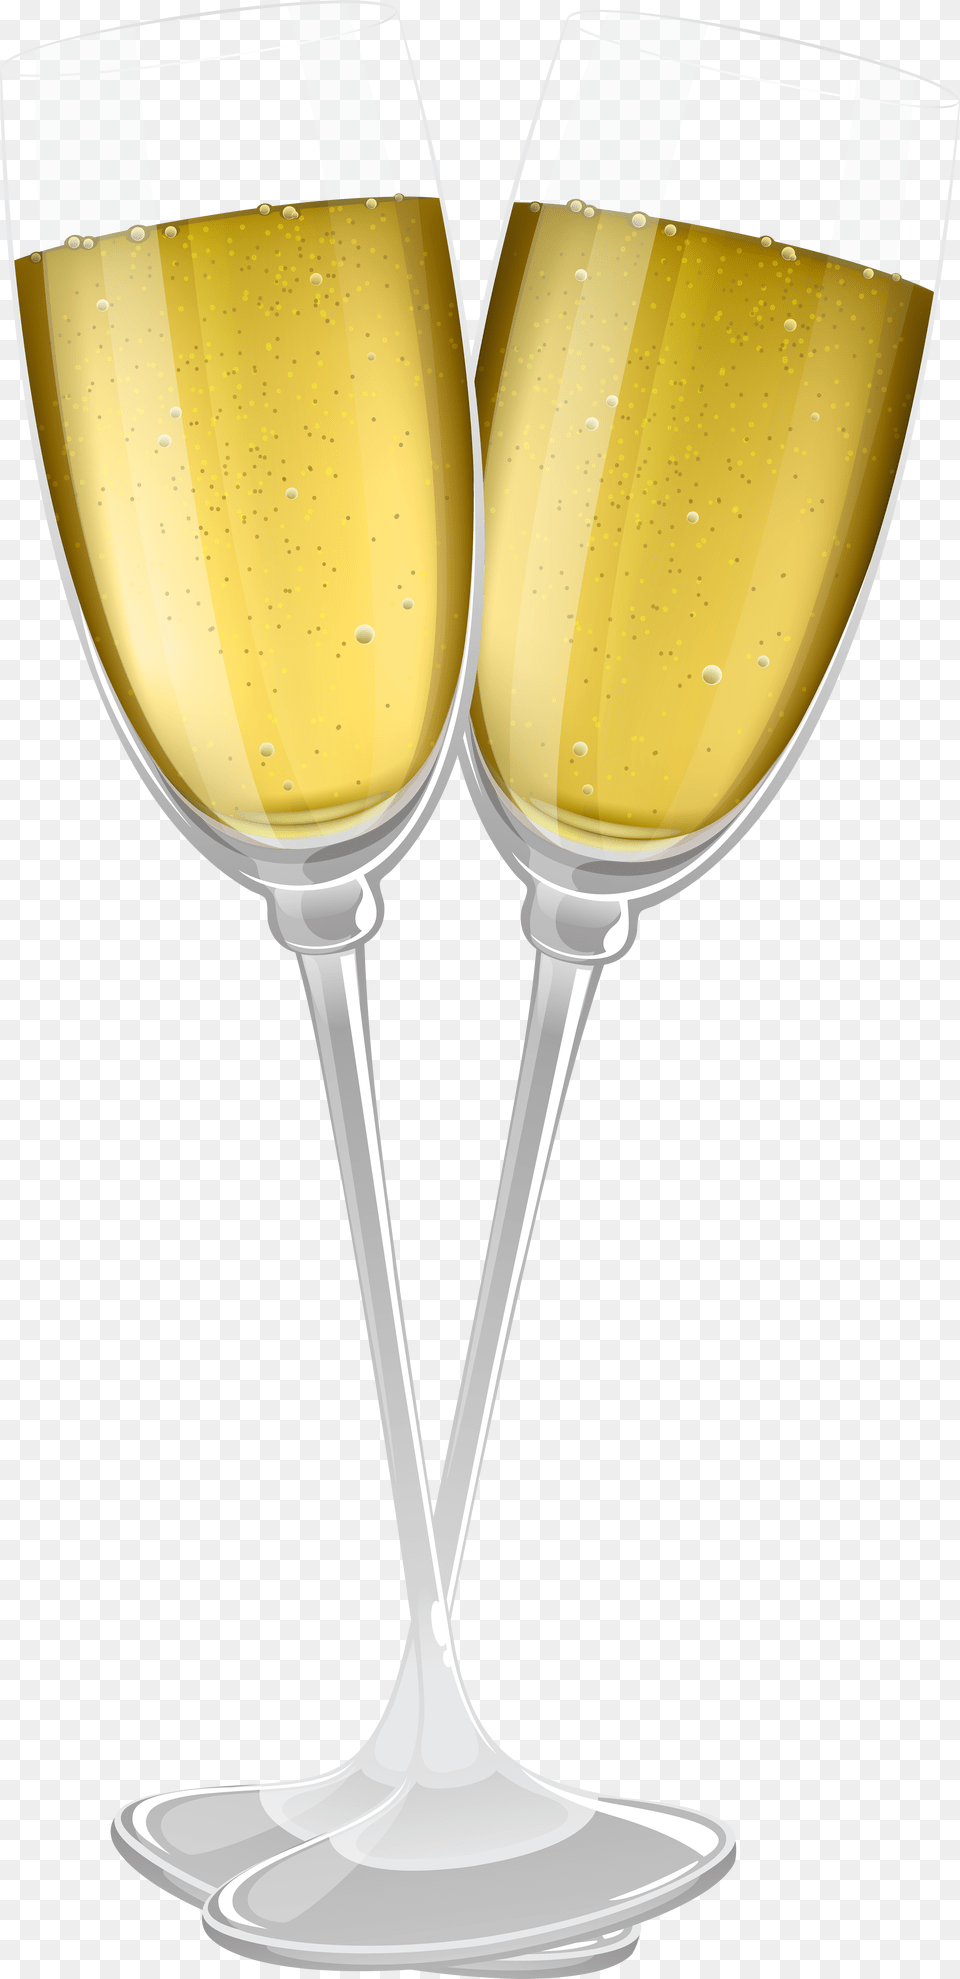 Glasses Of Champagne Transparent Glasses Wine Transparent, Alcohol, Beverage, Glass, Liquor Png Image